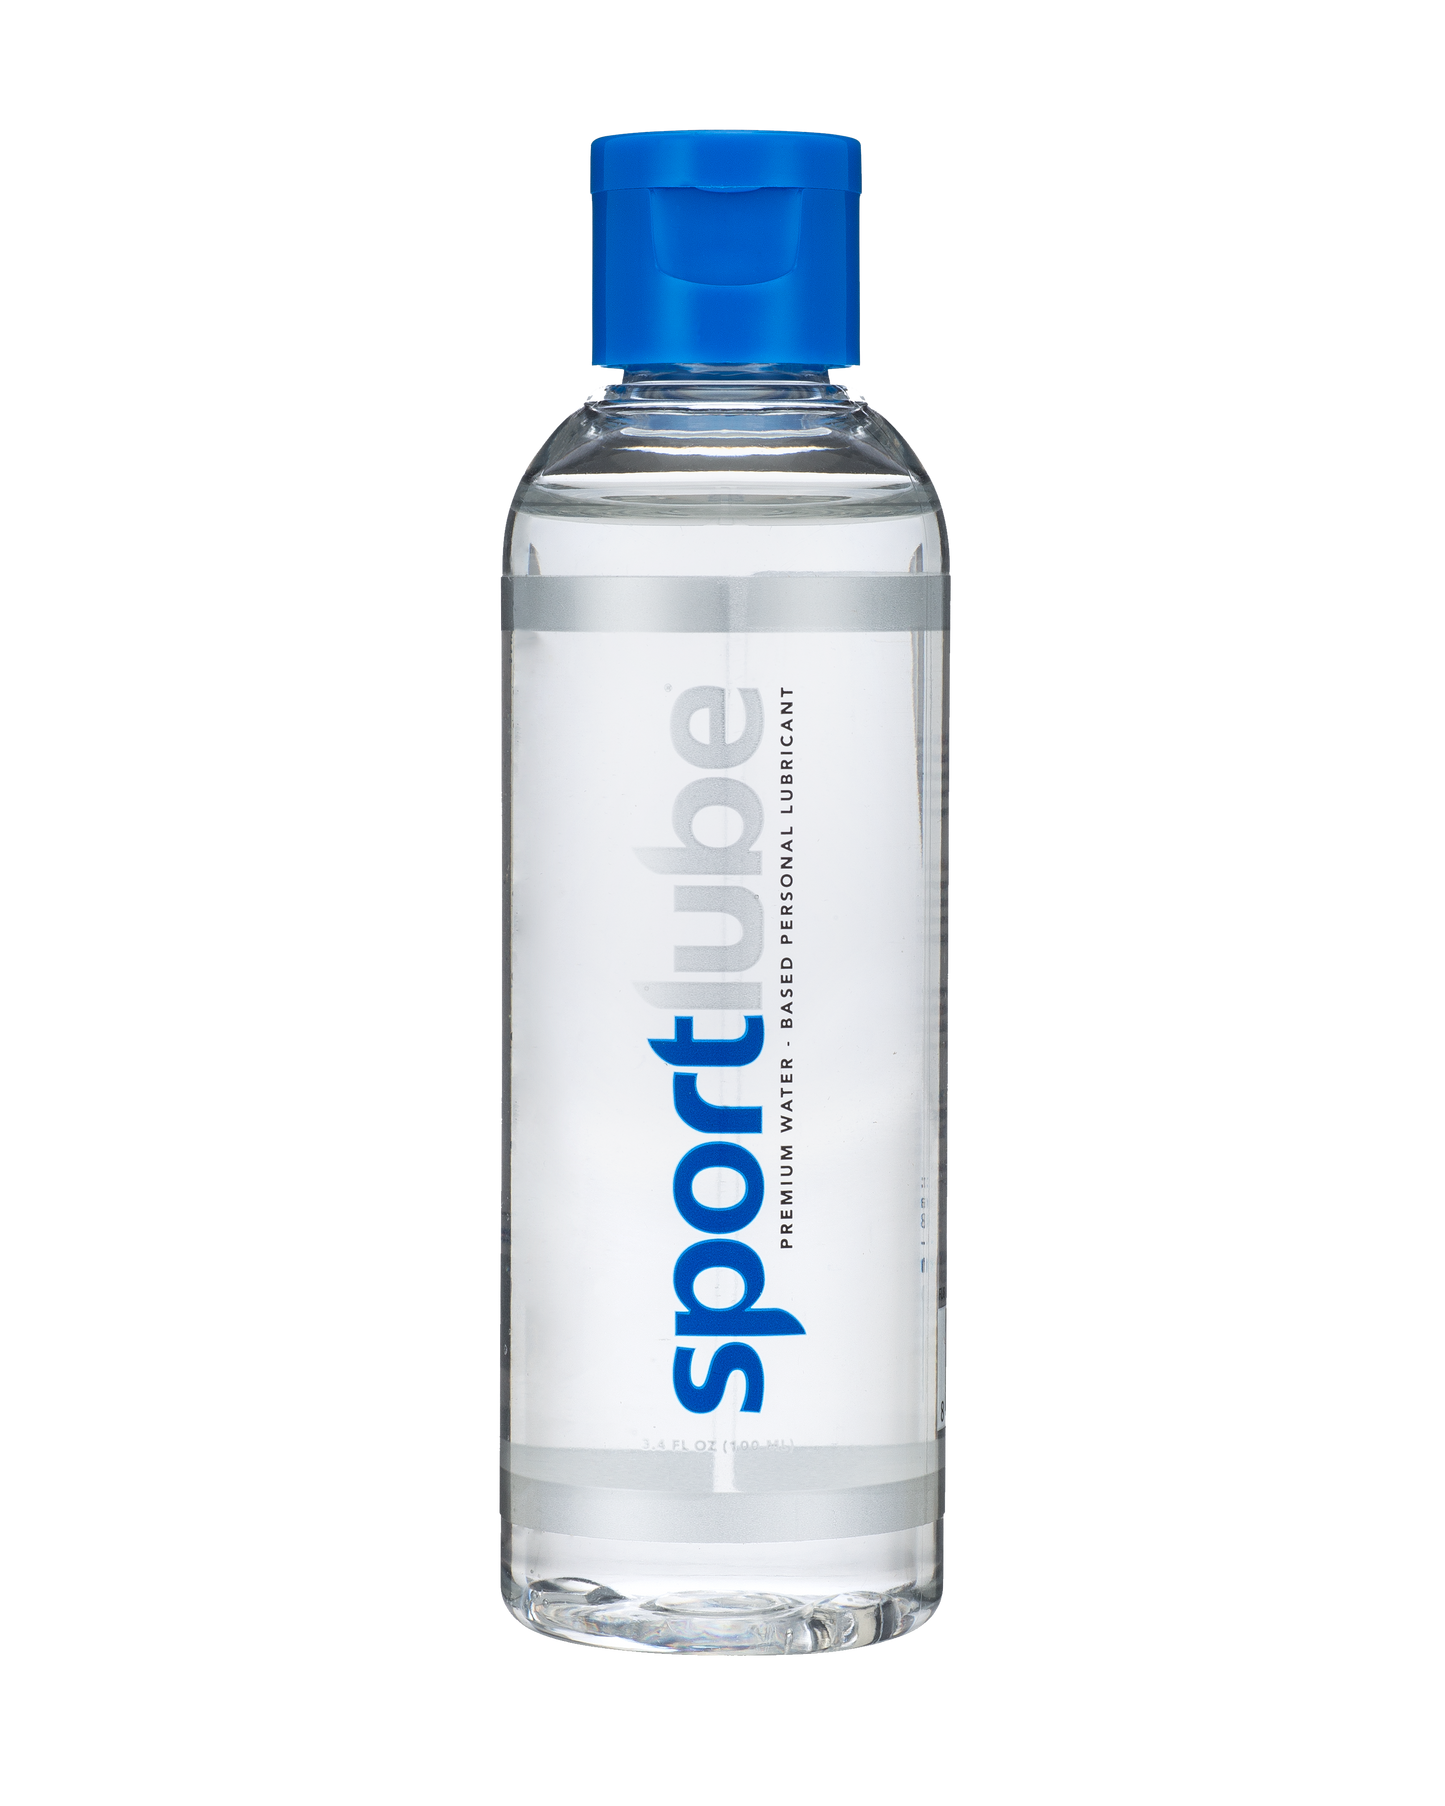 SportLube Premium Water-Based Lubricant 3.4 oz (100 ml)